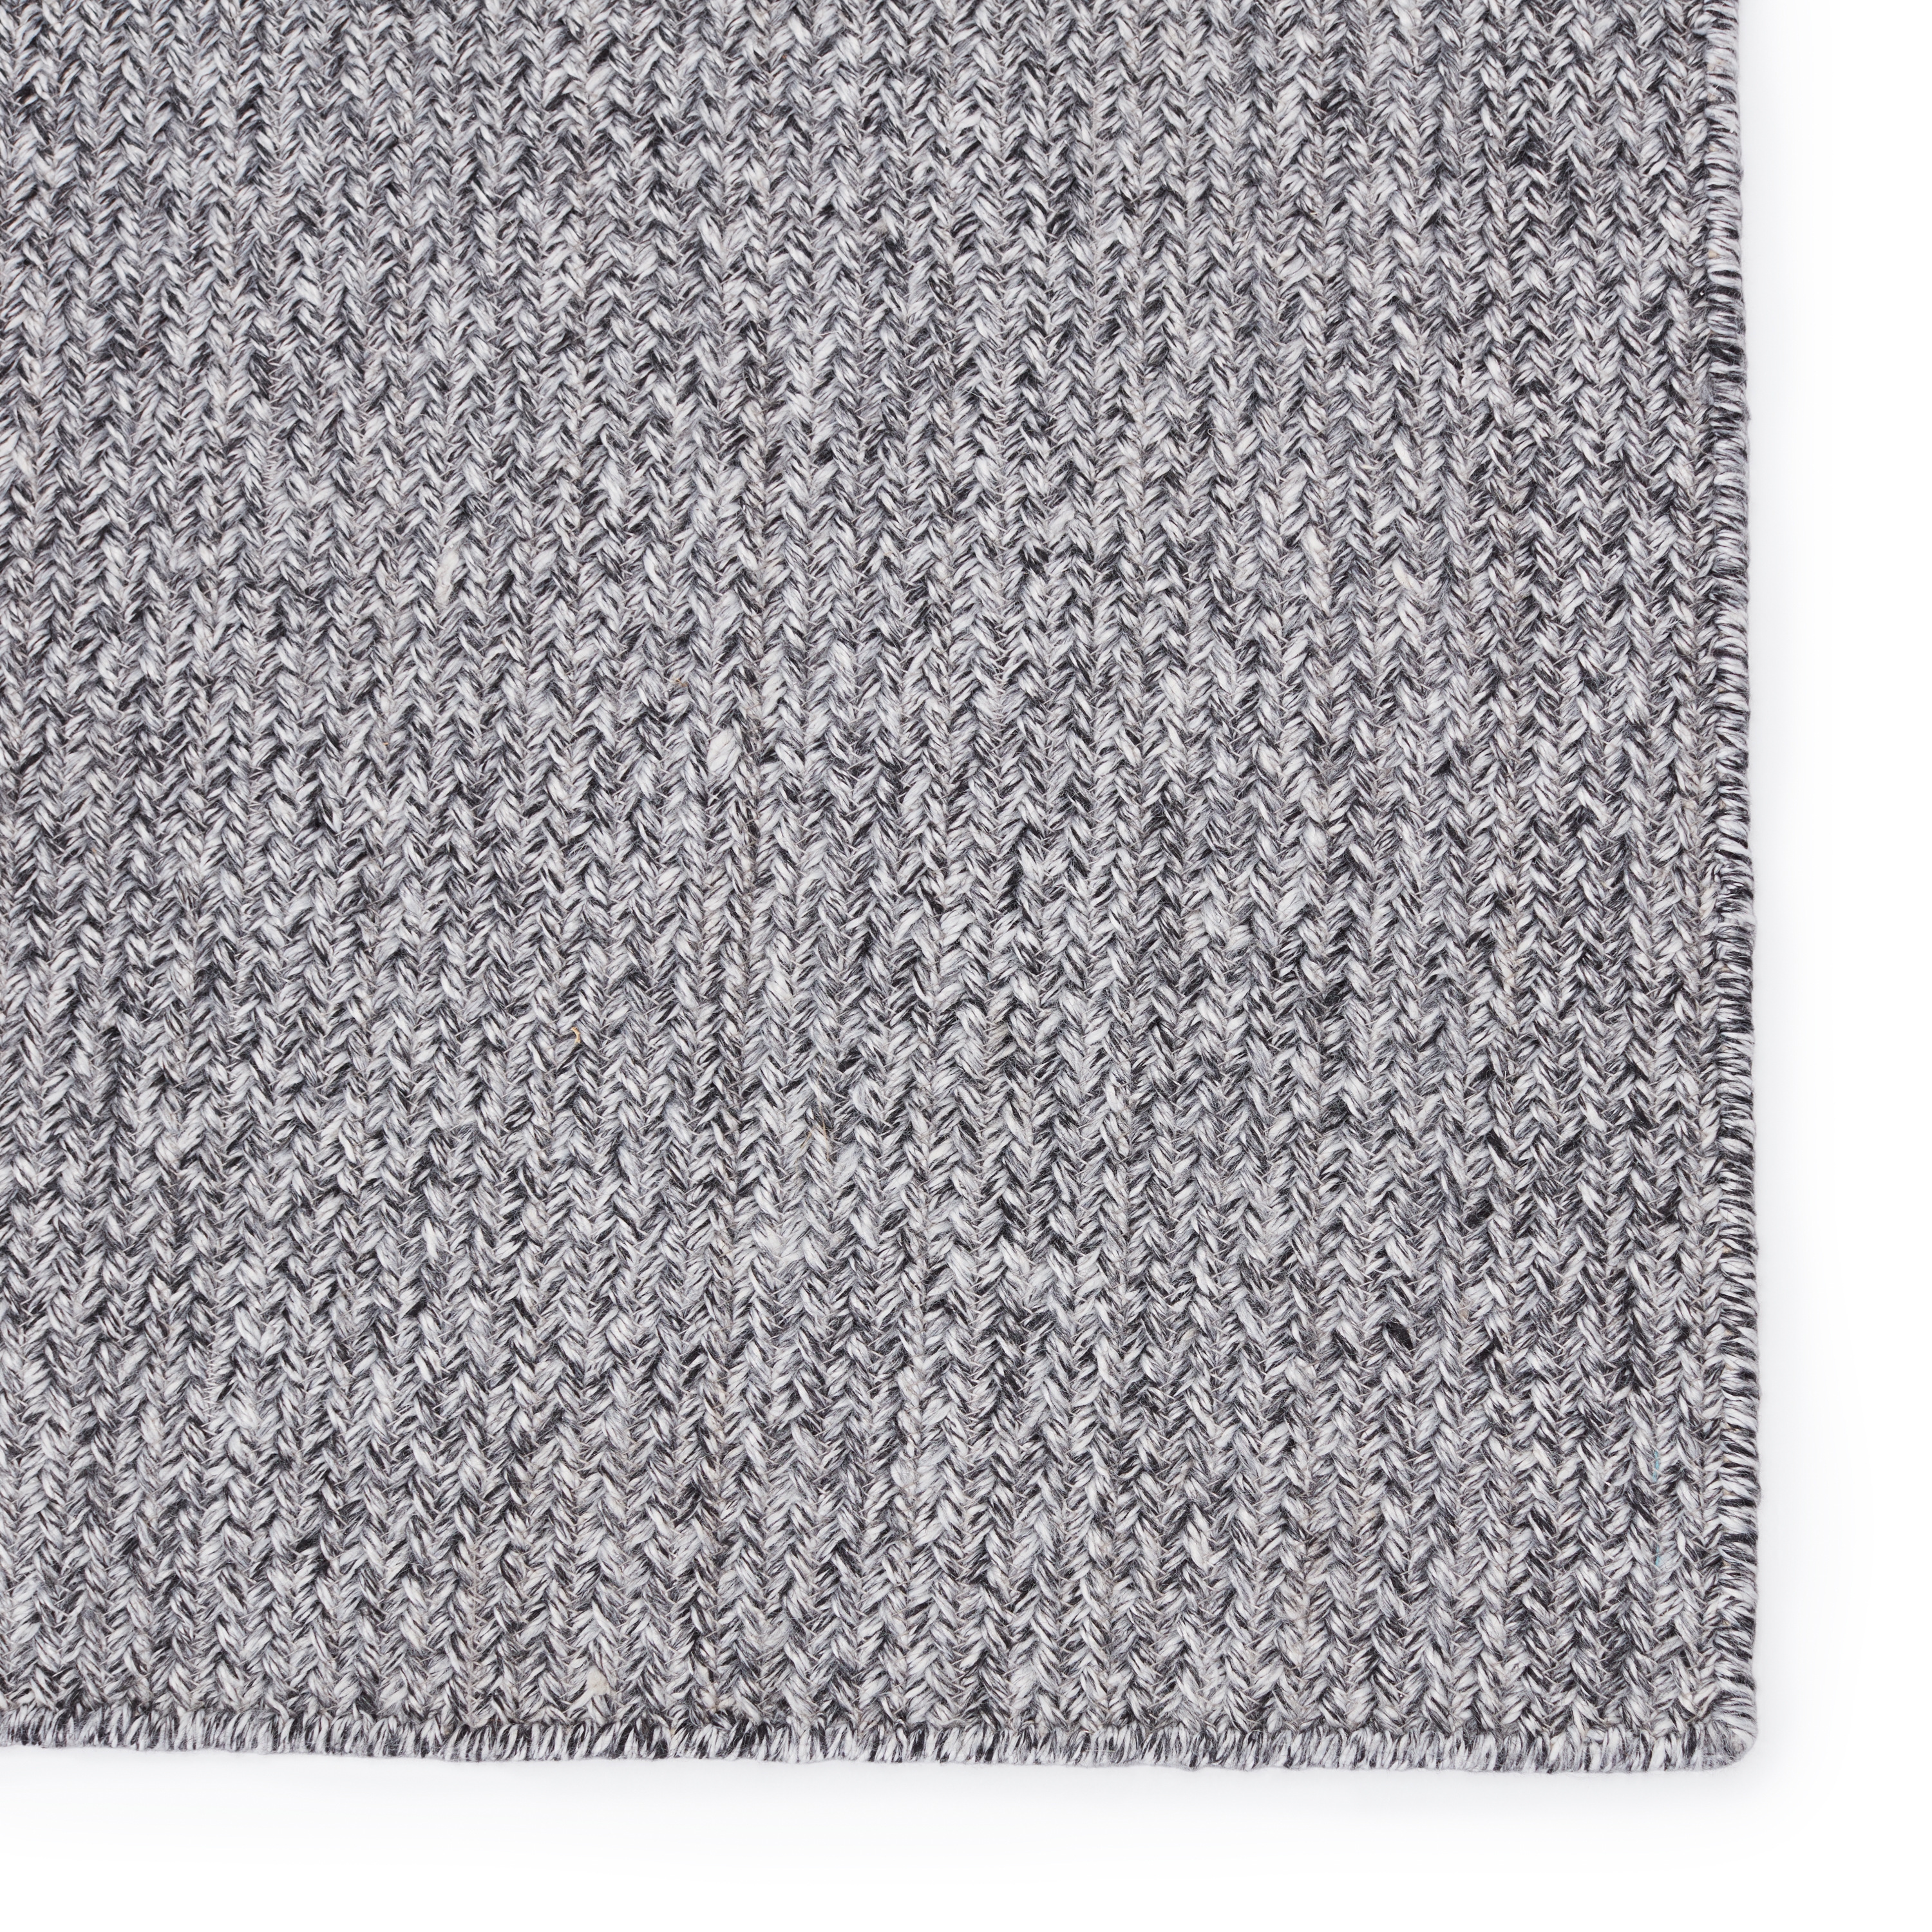 Maracay Indoor/ Outdoor Solid Black/ White Area Rug (5'X8') - Image 3